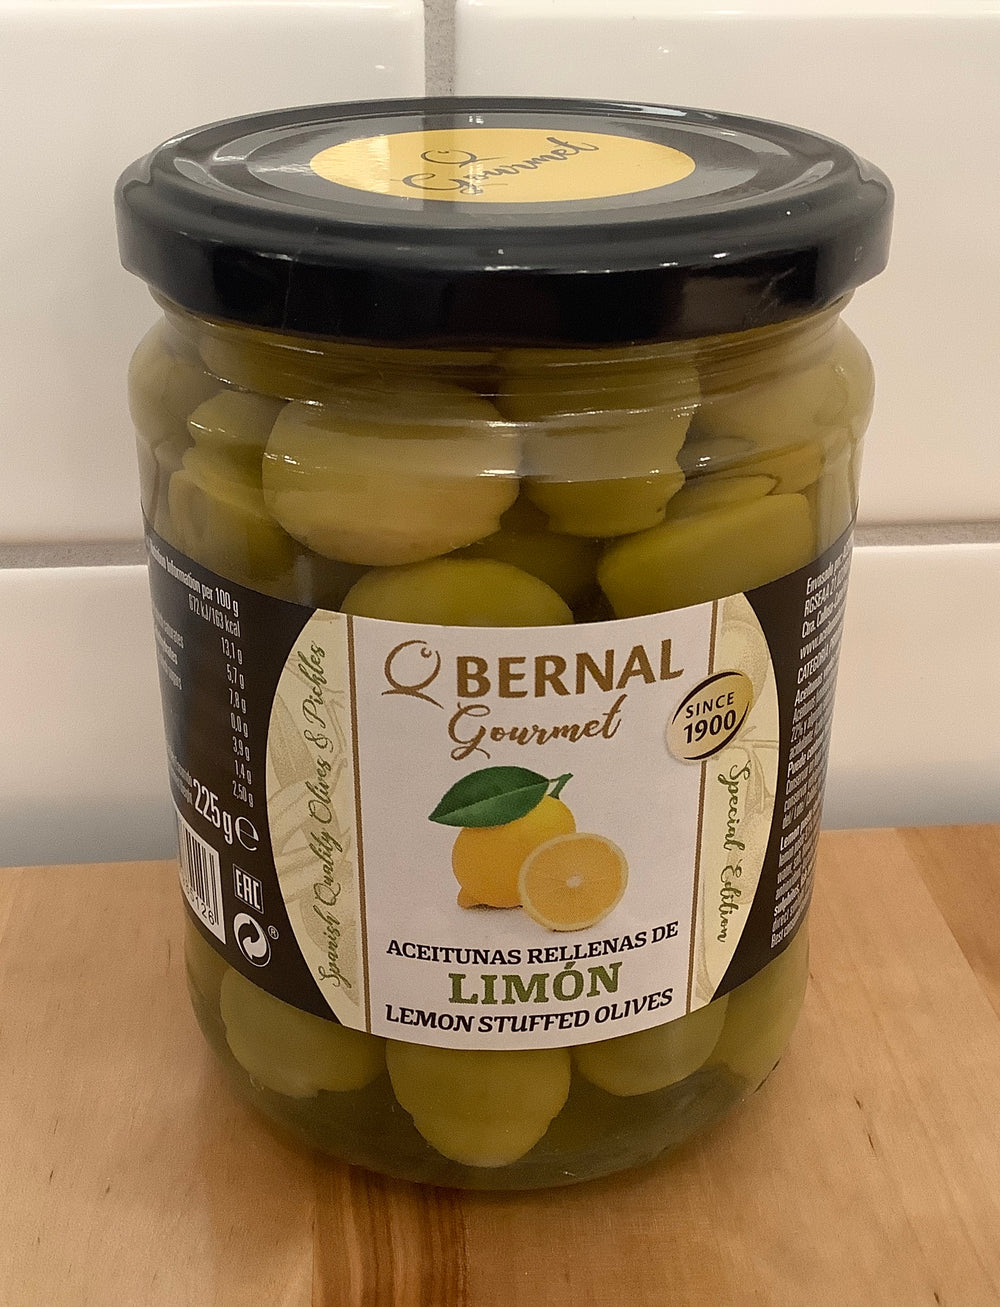 BERNAL Manzanilla Gourmet Olives with Lemon